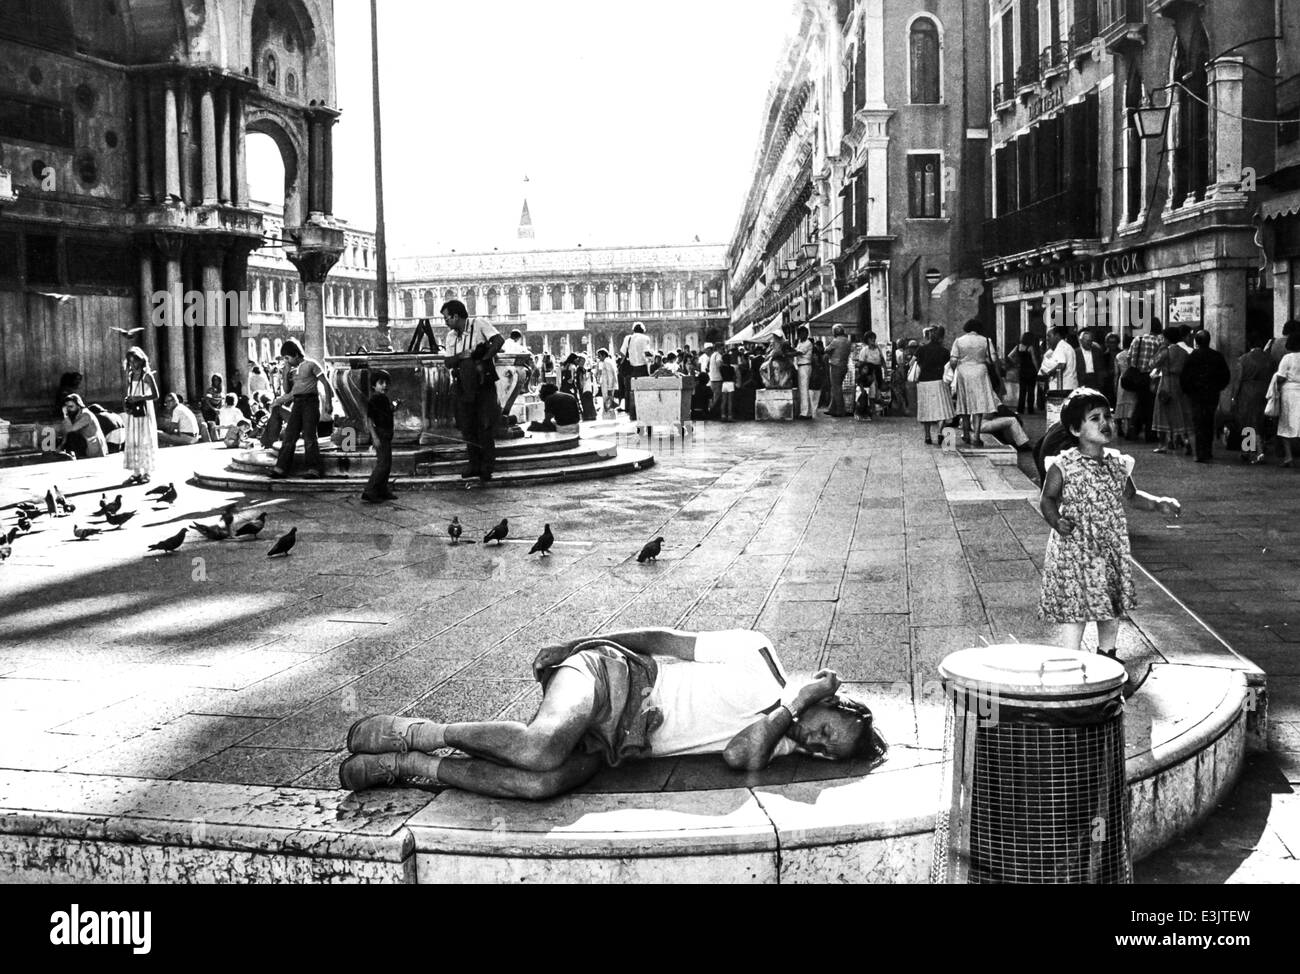 Poverty Italy Stock Photos & Poverty Italy Stock Images - Alamy